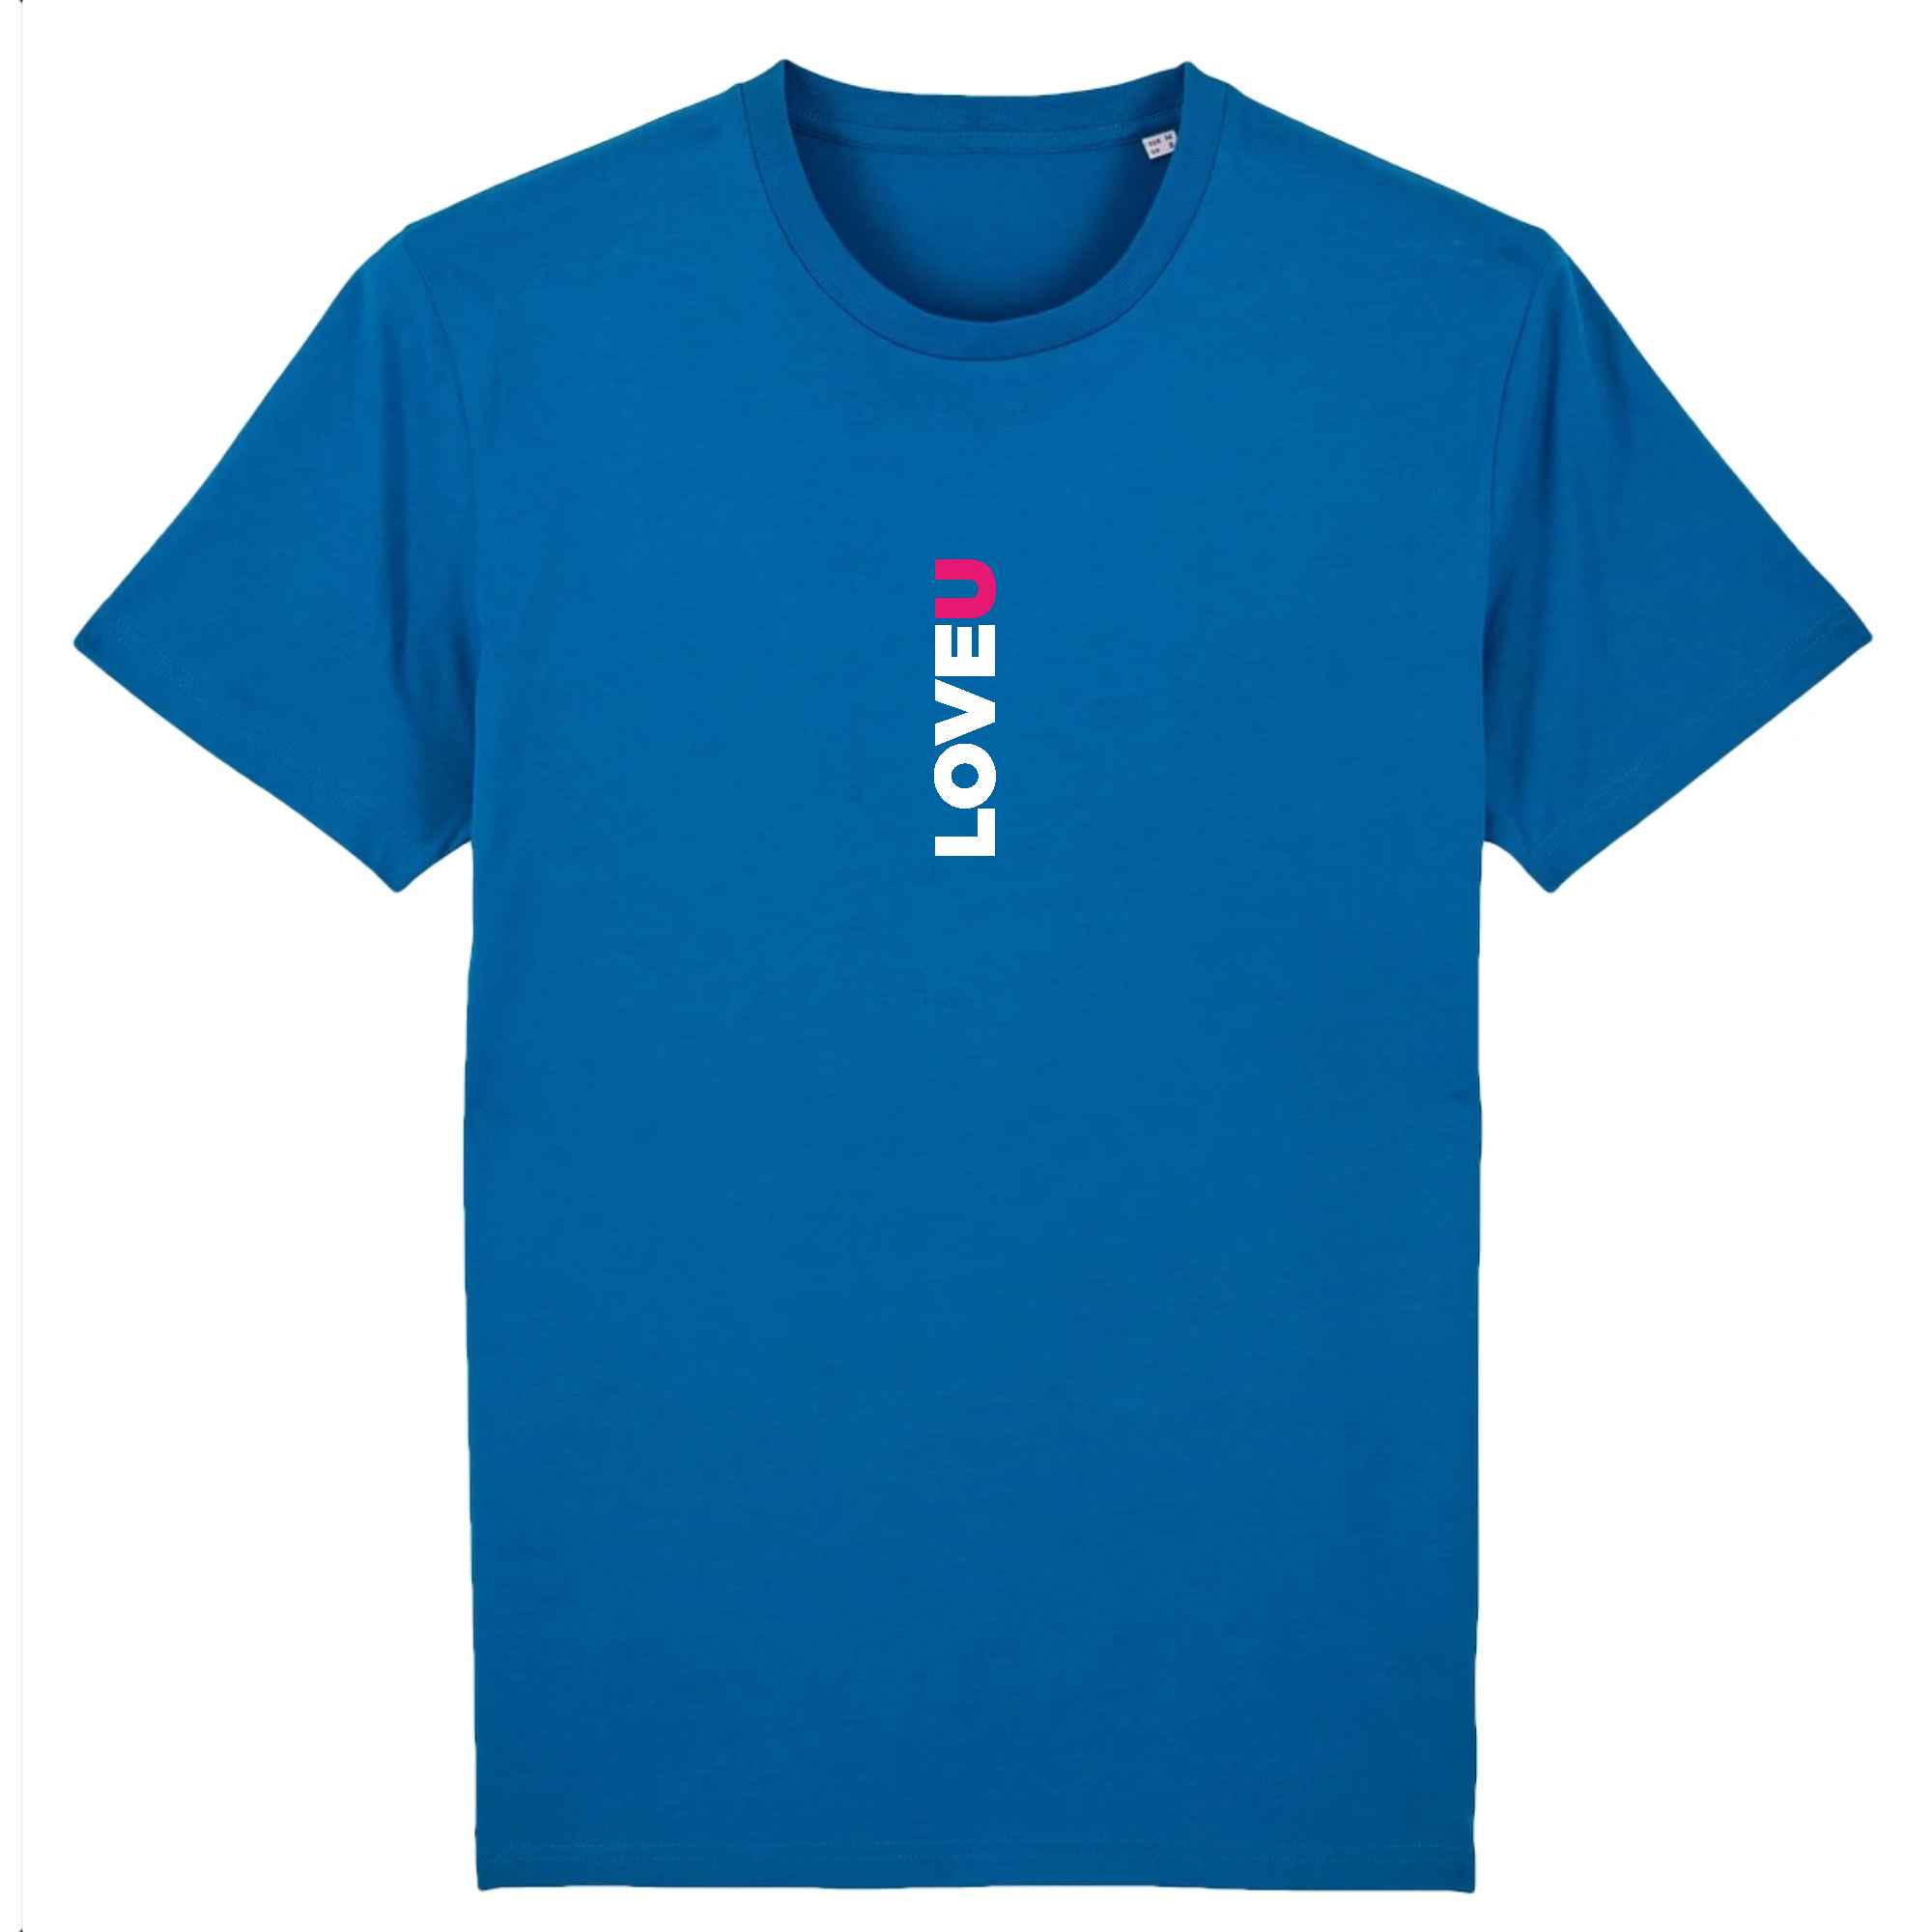 T-shirt unisexe bleu LOVE YOU - Collection Saint-valentin